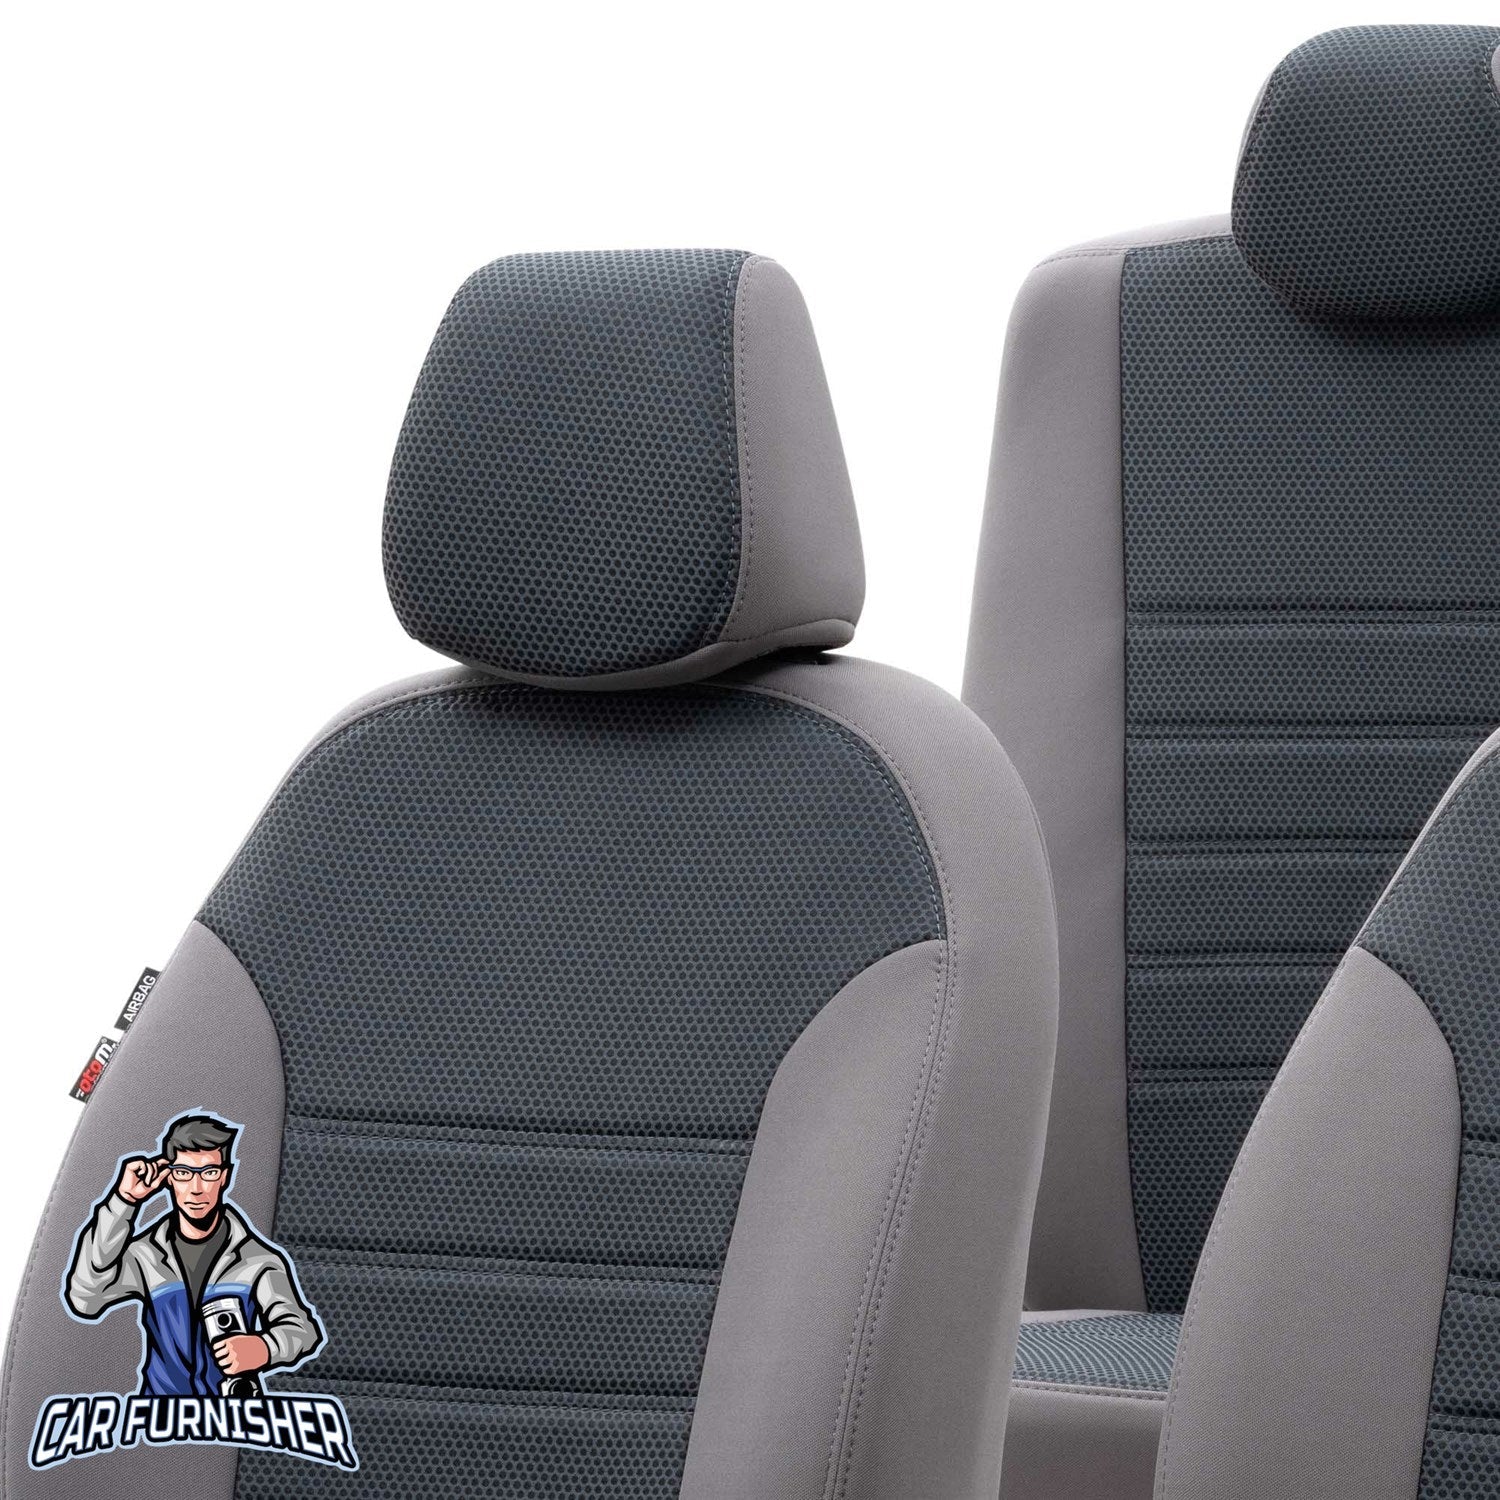 Volkswagen Tiguan Seat Cover Original Jacquard Design Smoked Jacquard Fabric